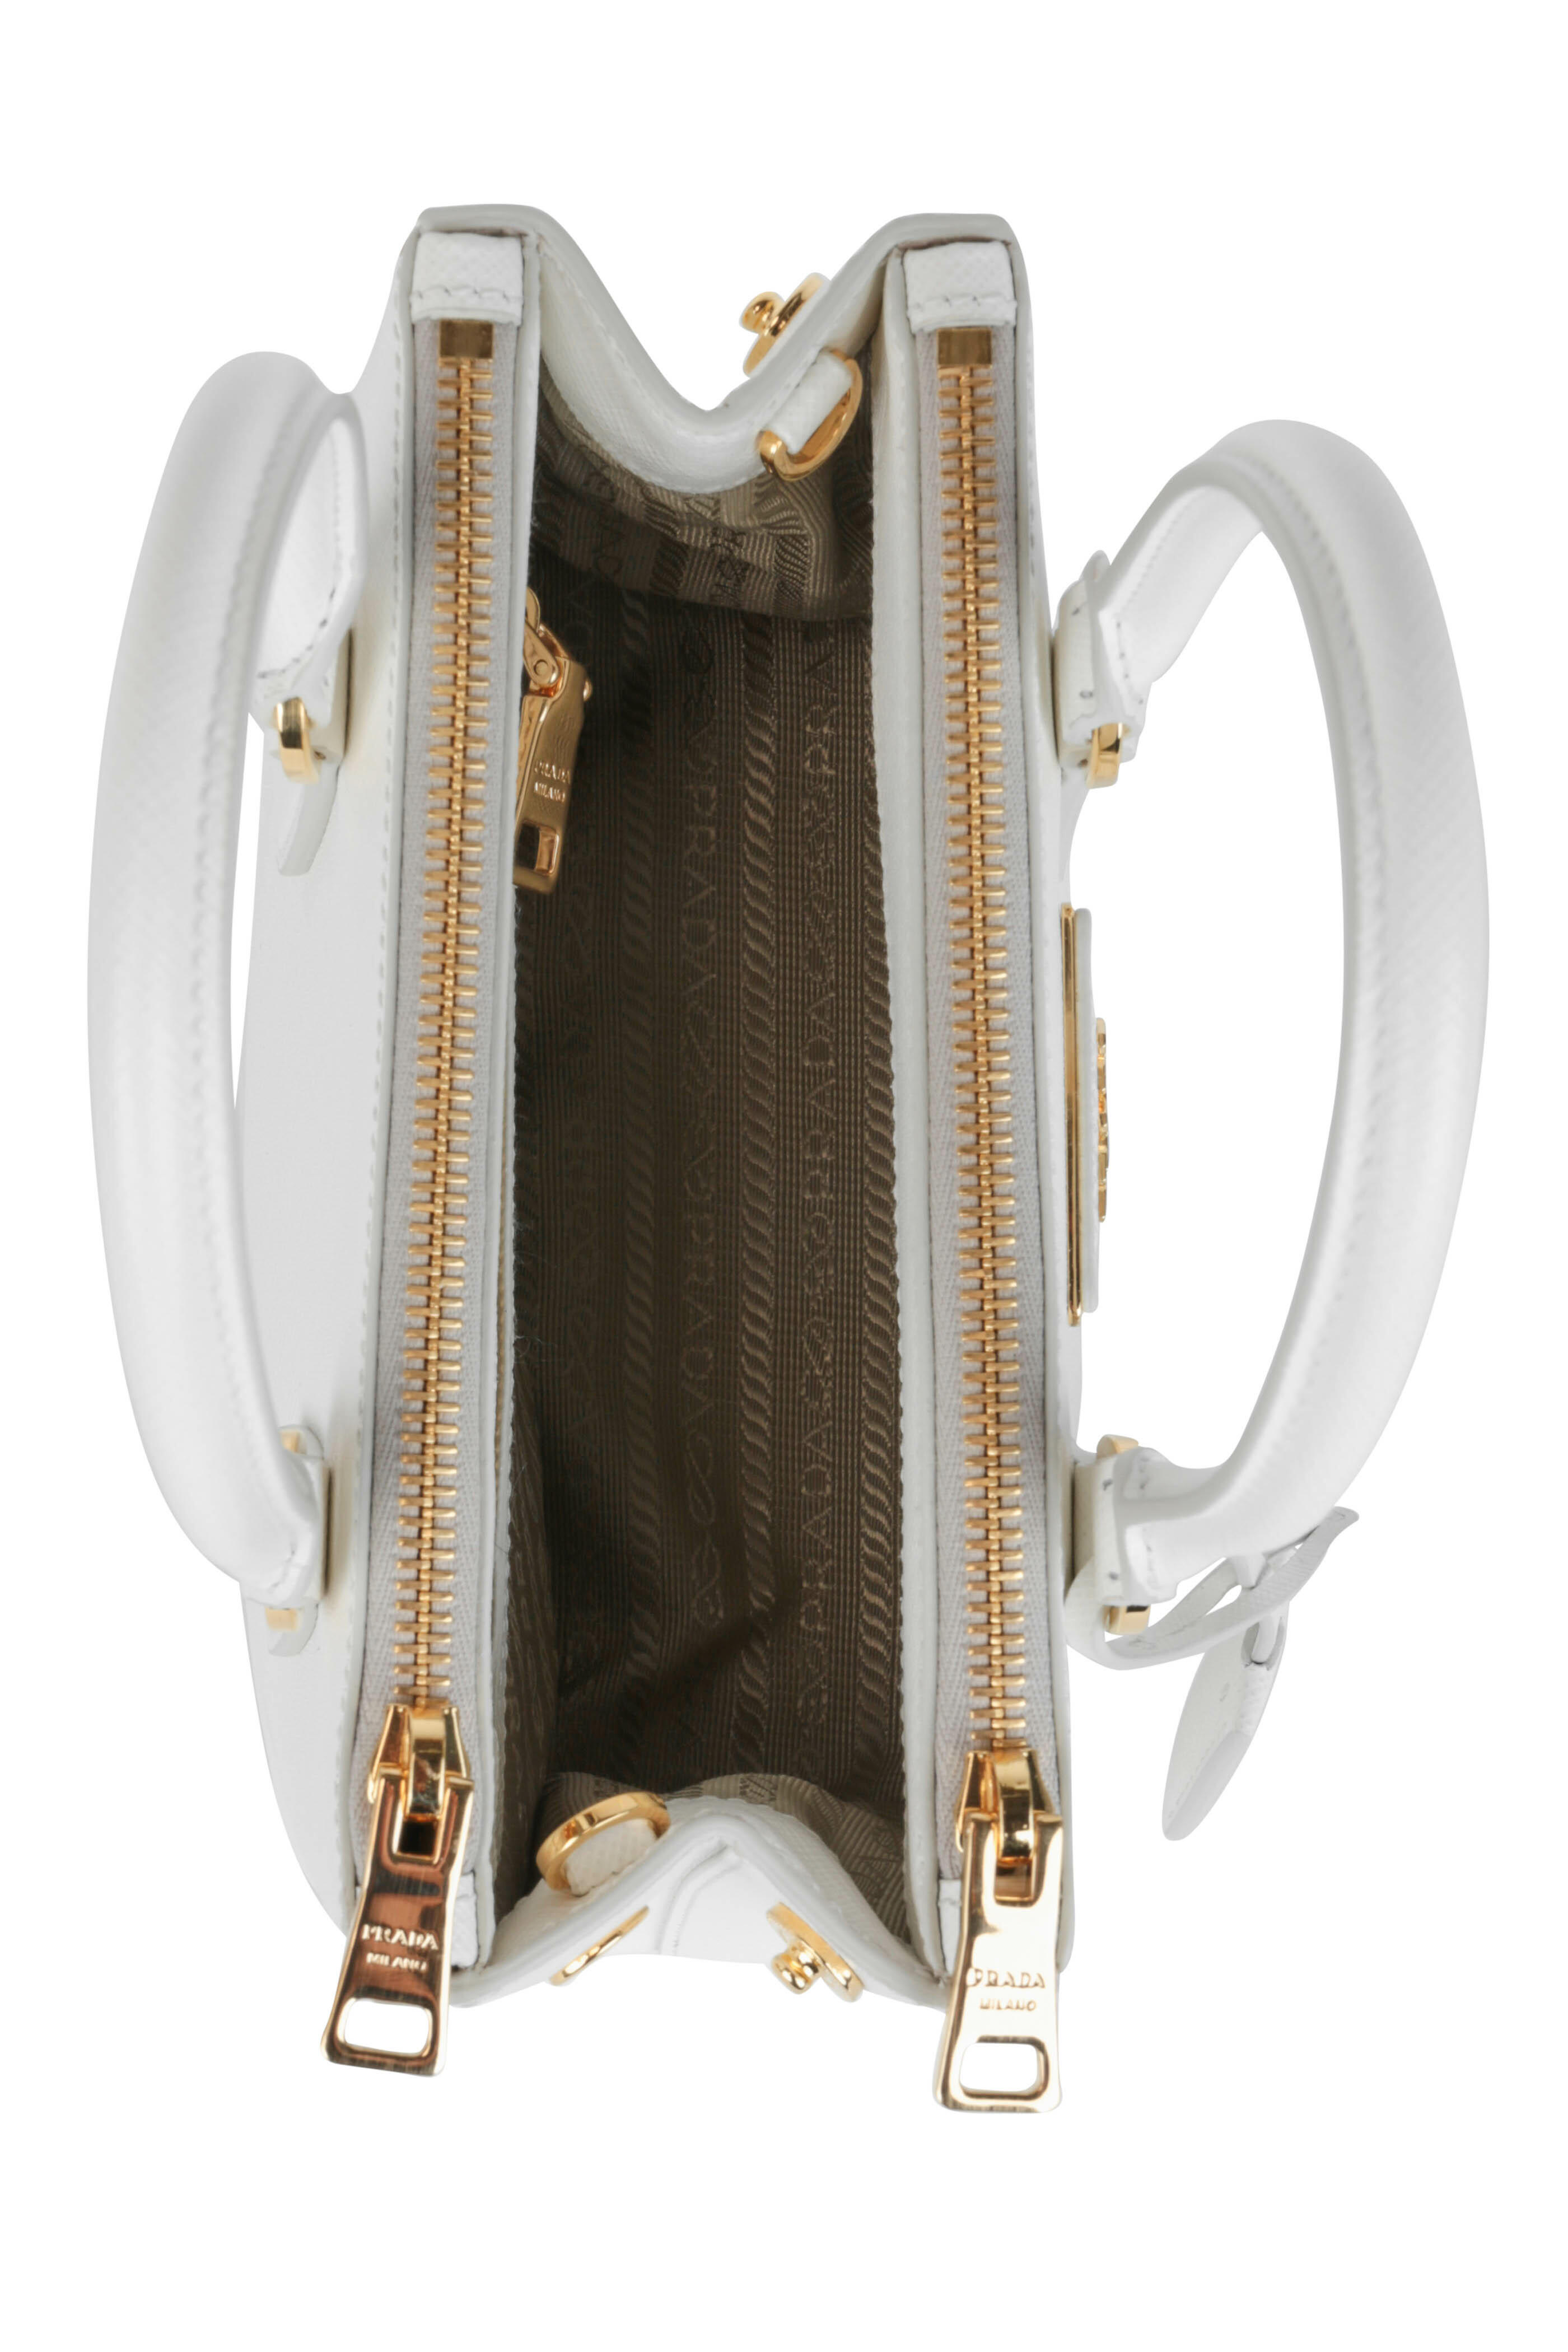 Prada Small Leather Galleria Saffiano Top-Handle Bag